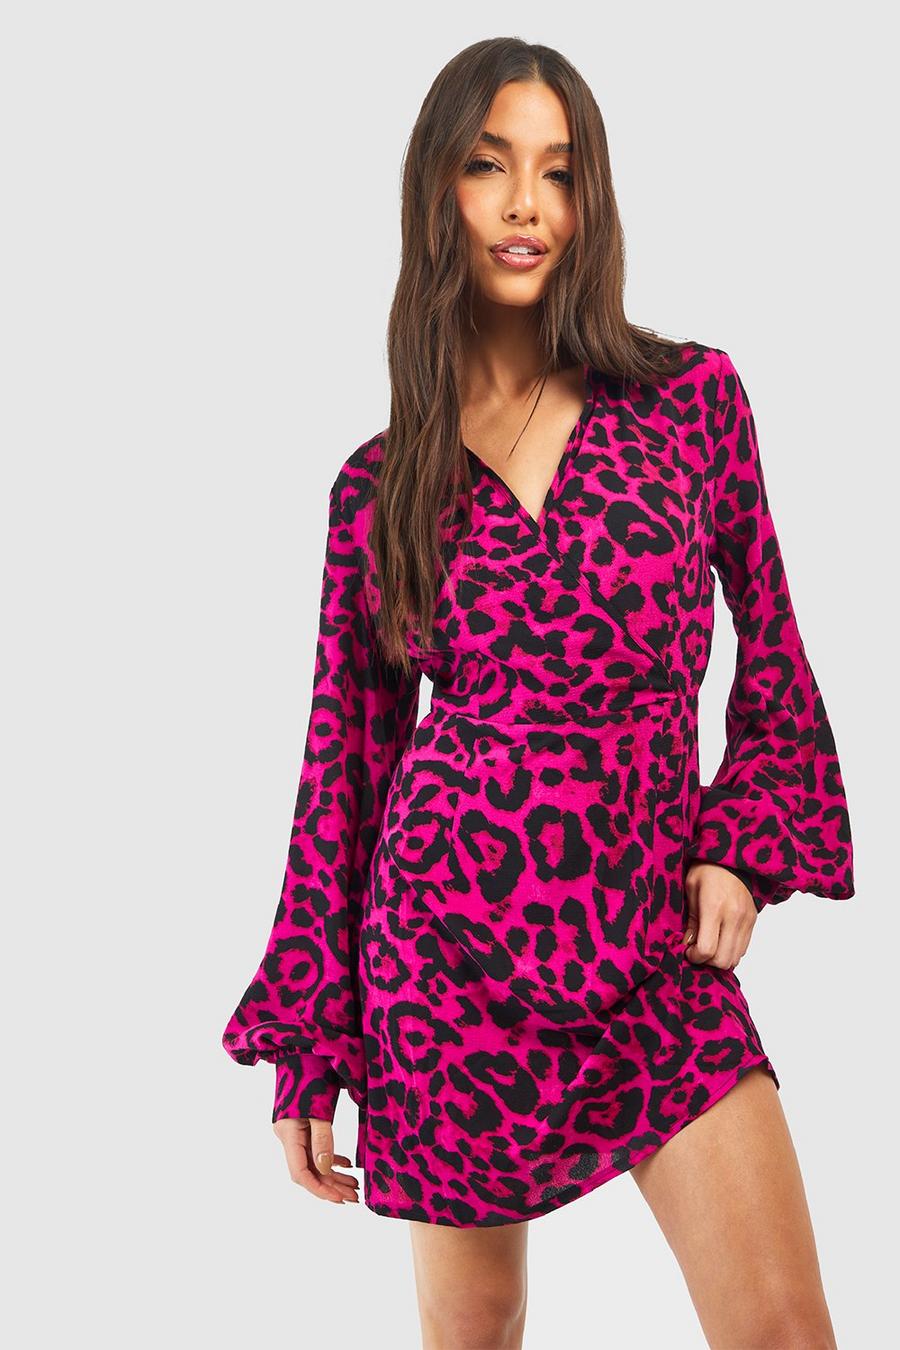 Robe chemise léopard, Hot pink